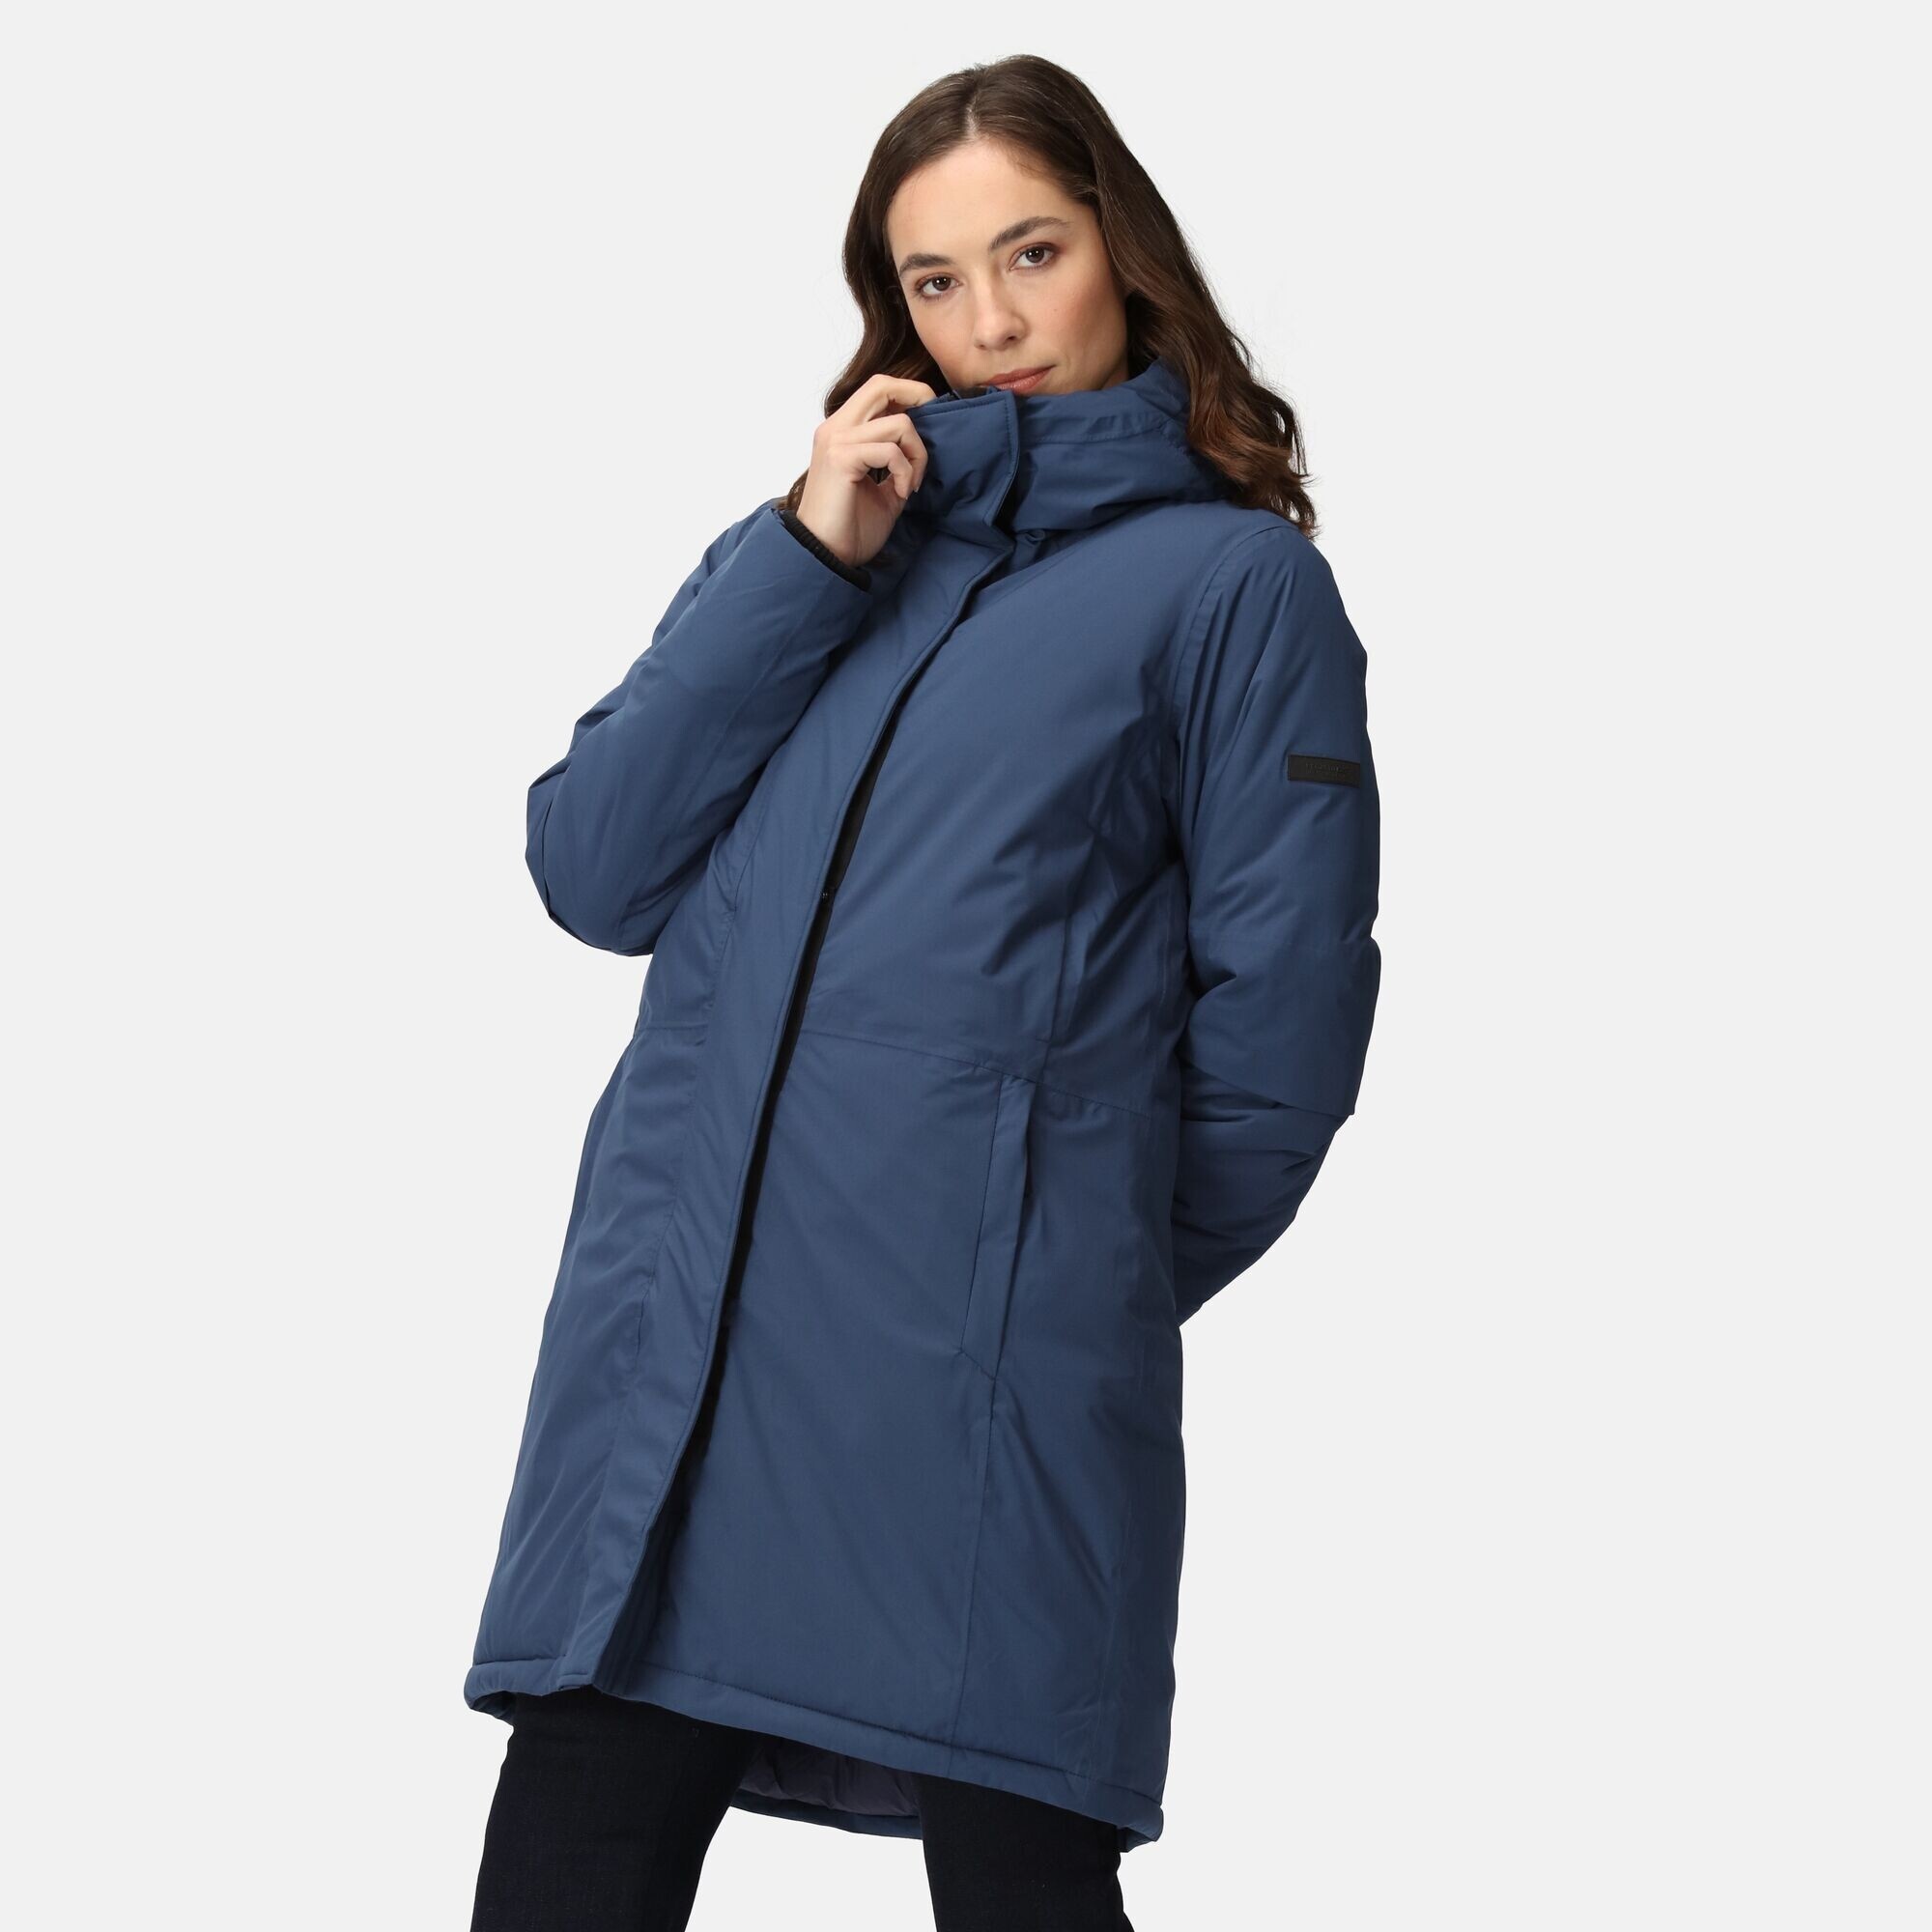 Dámský zimní kabát Yewbank III RWP384-VD4 modrý - Regatta 38